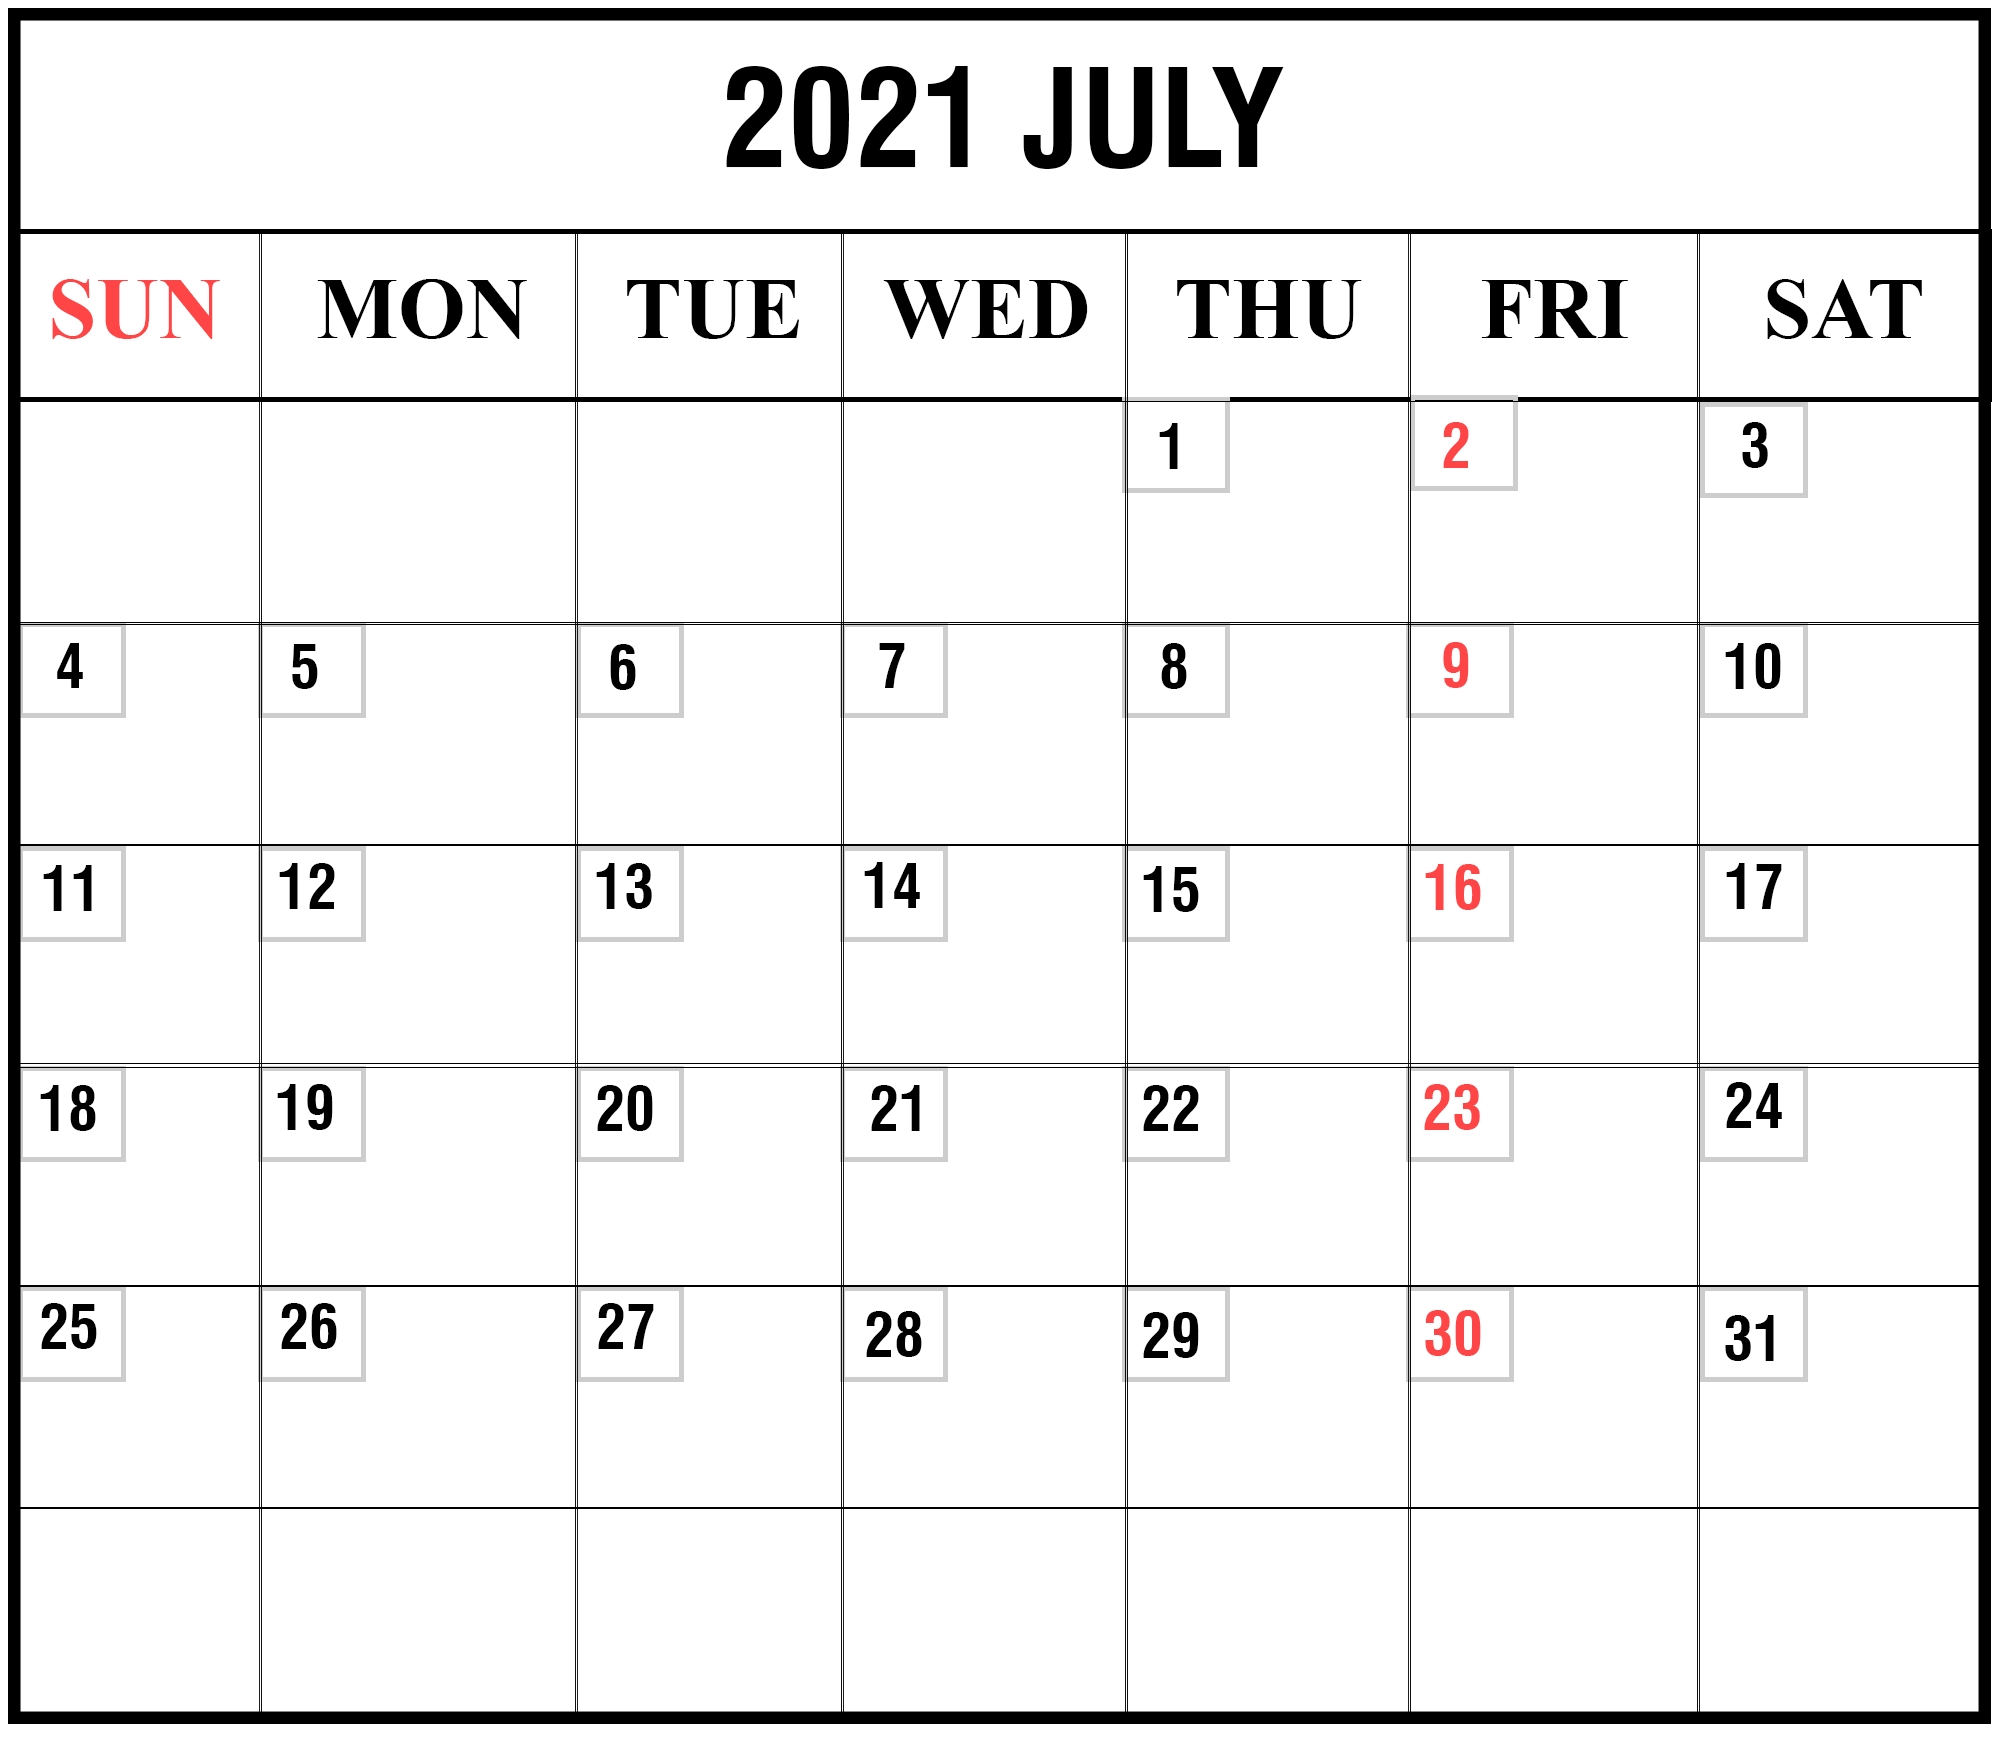 Free Blank July 2021 Printable Calendar Template In Pdf 1 - Calendar Template 2021 One Page Calendar July 2020 To June 2021